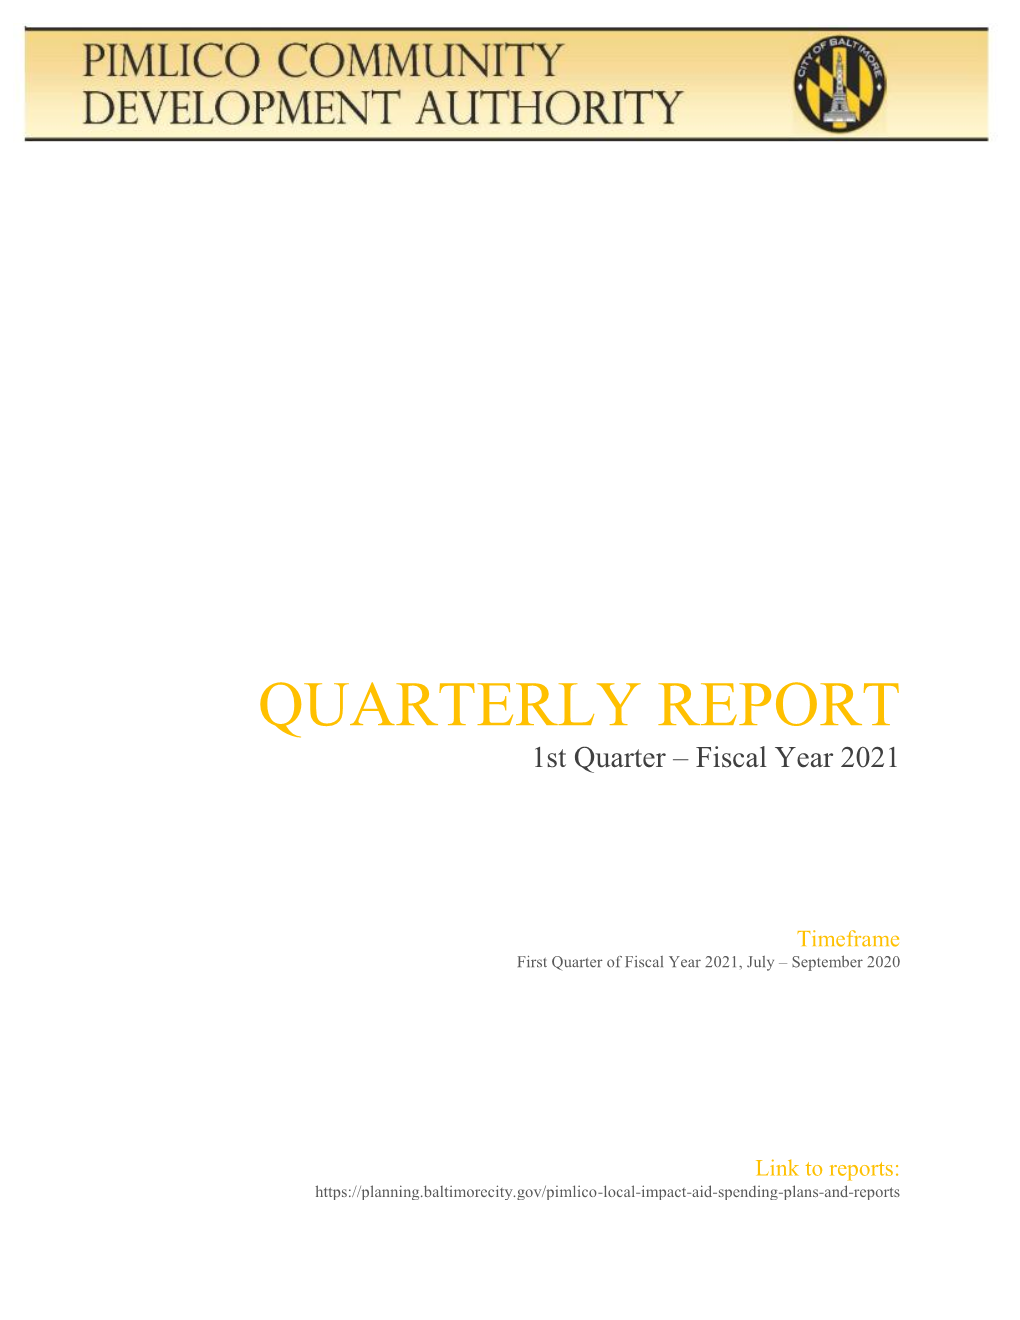 September 2020 Quarterly Report